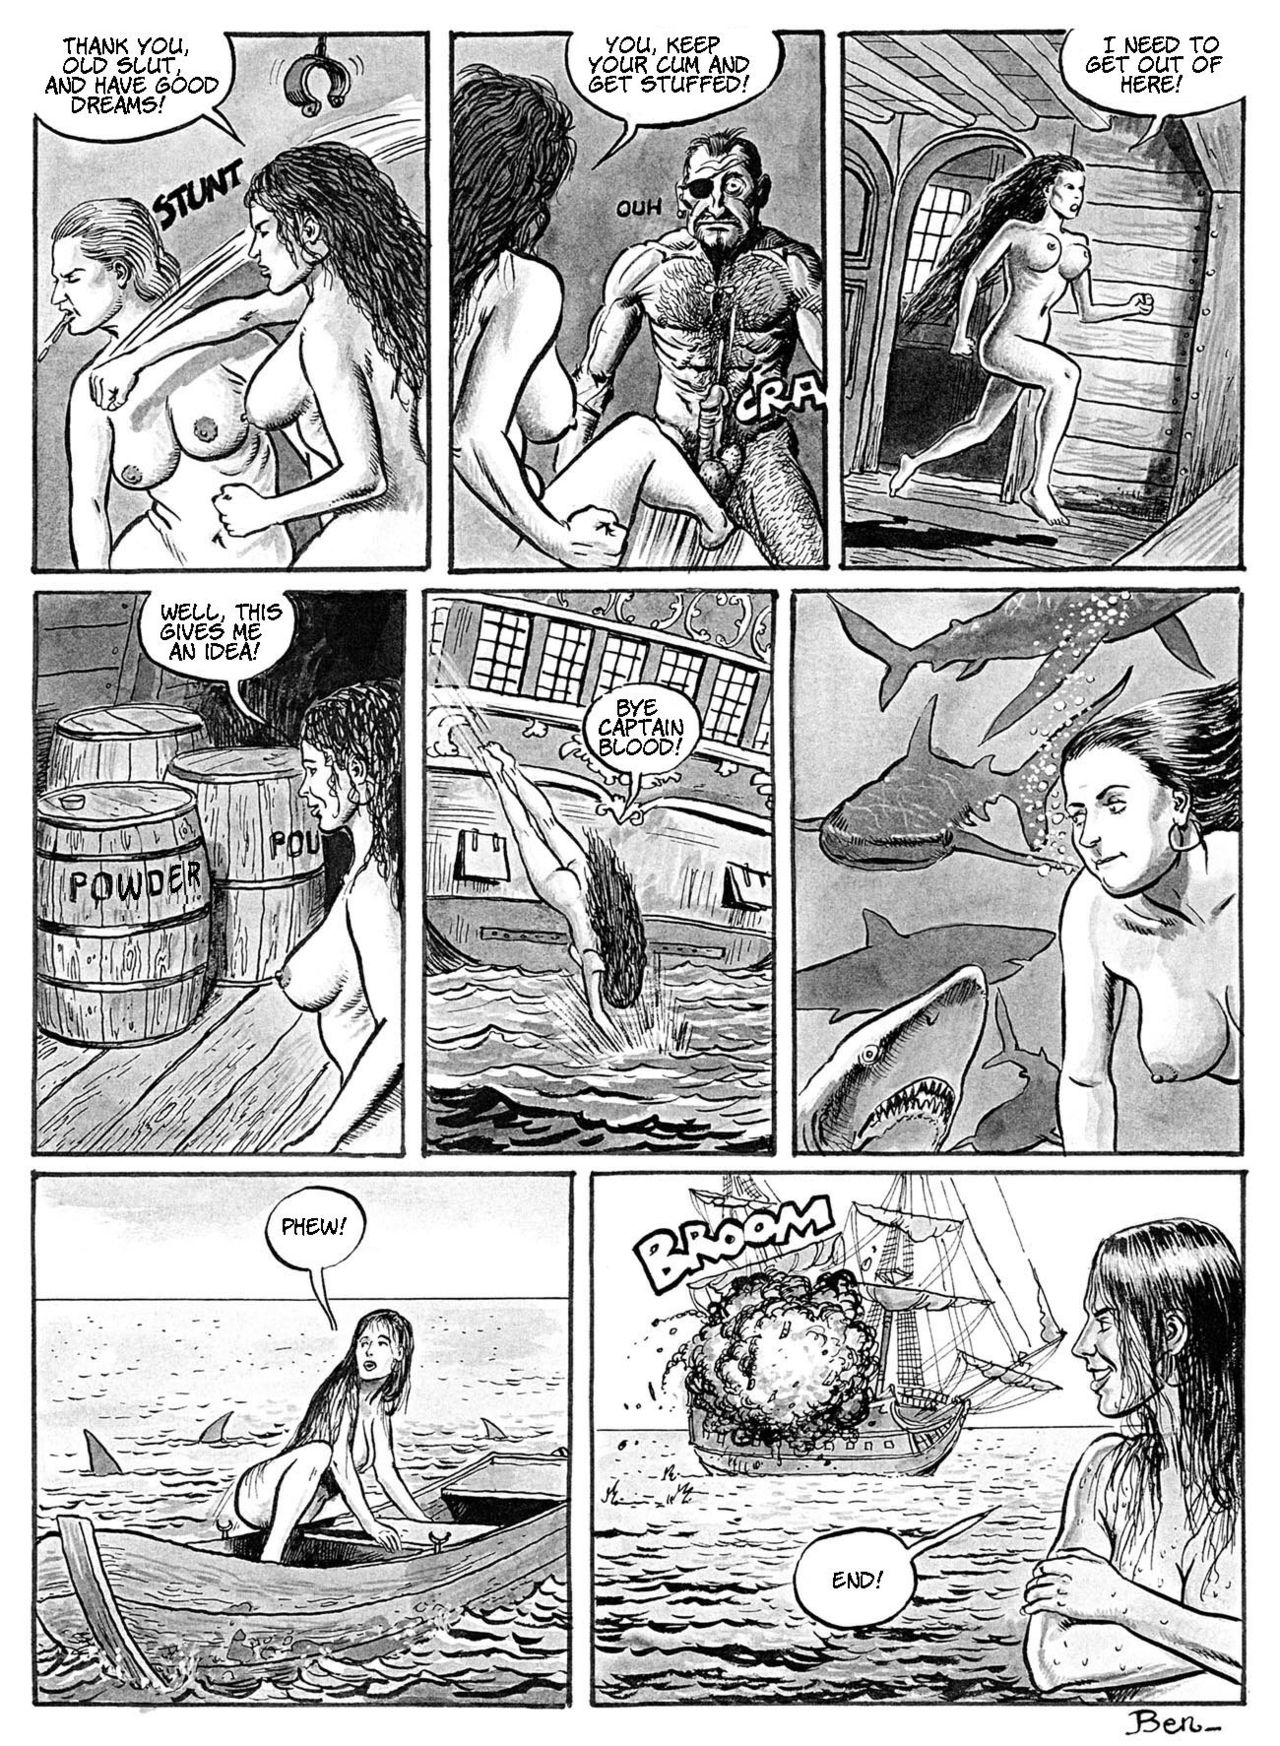 Порно комиксы с пиратами фото 88